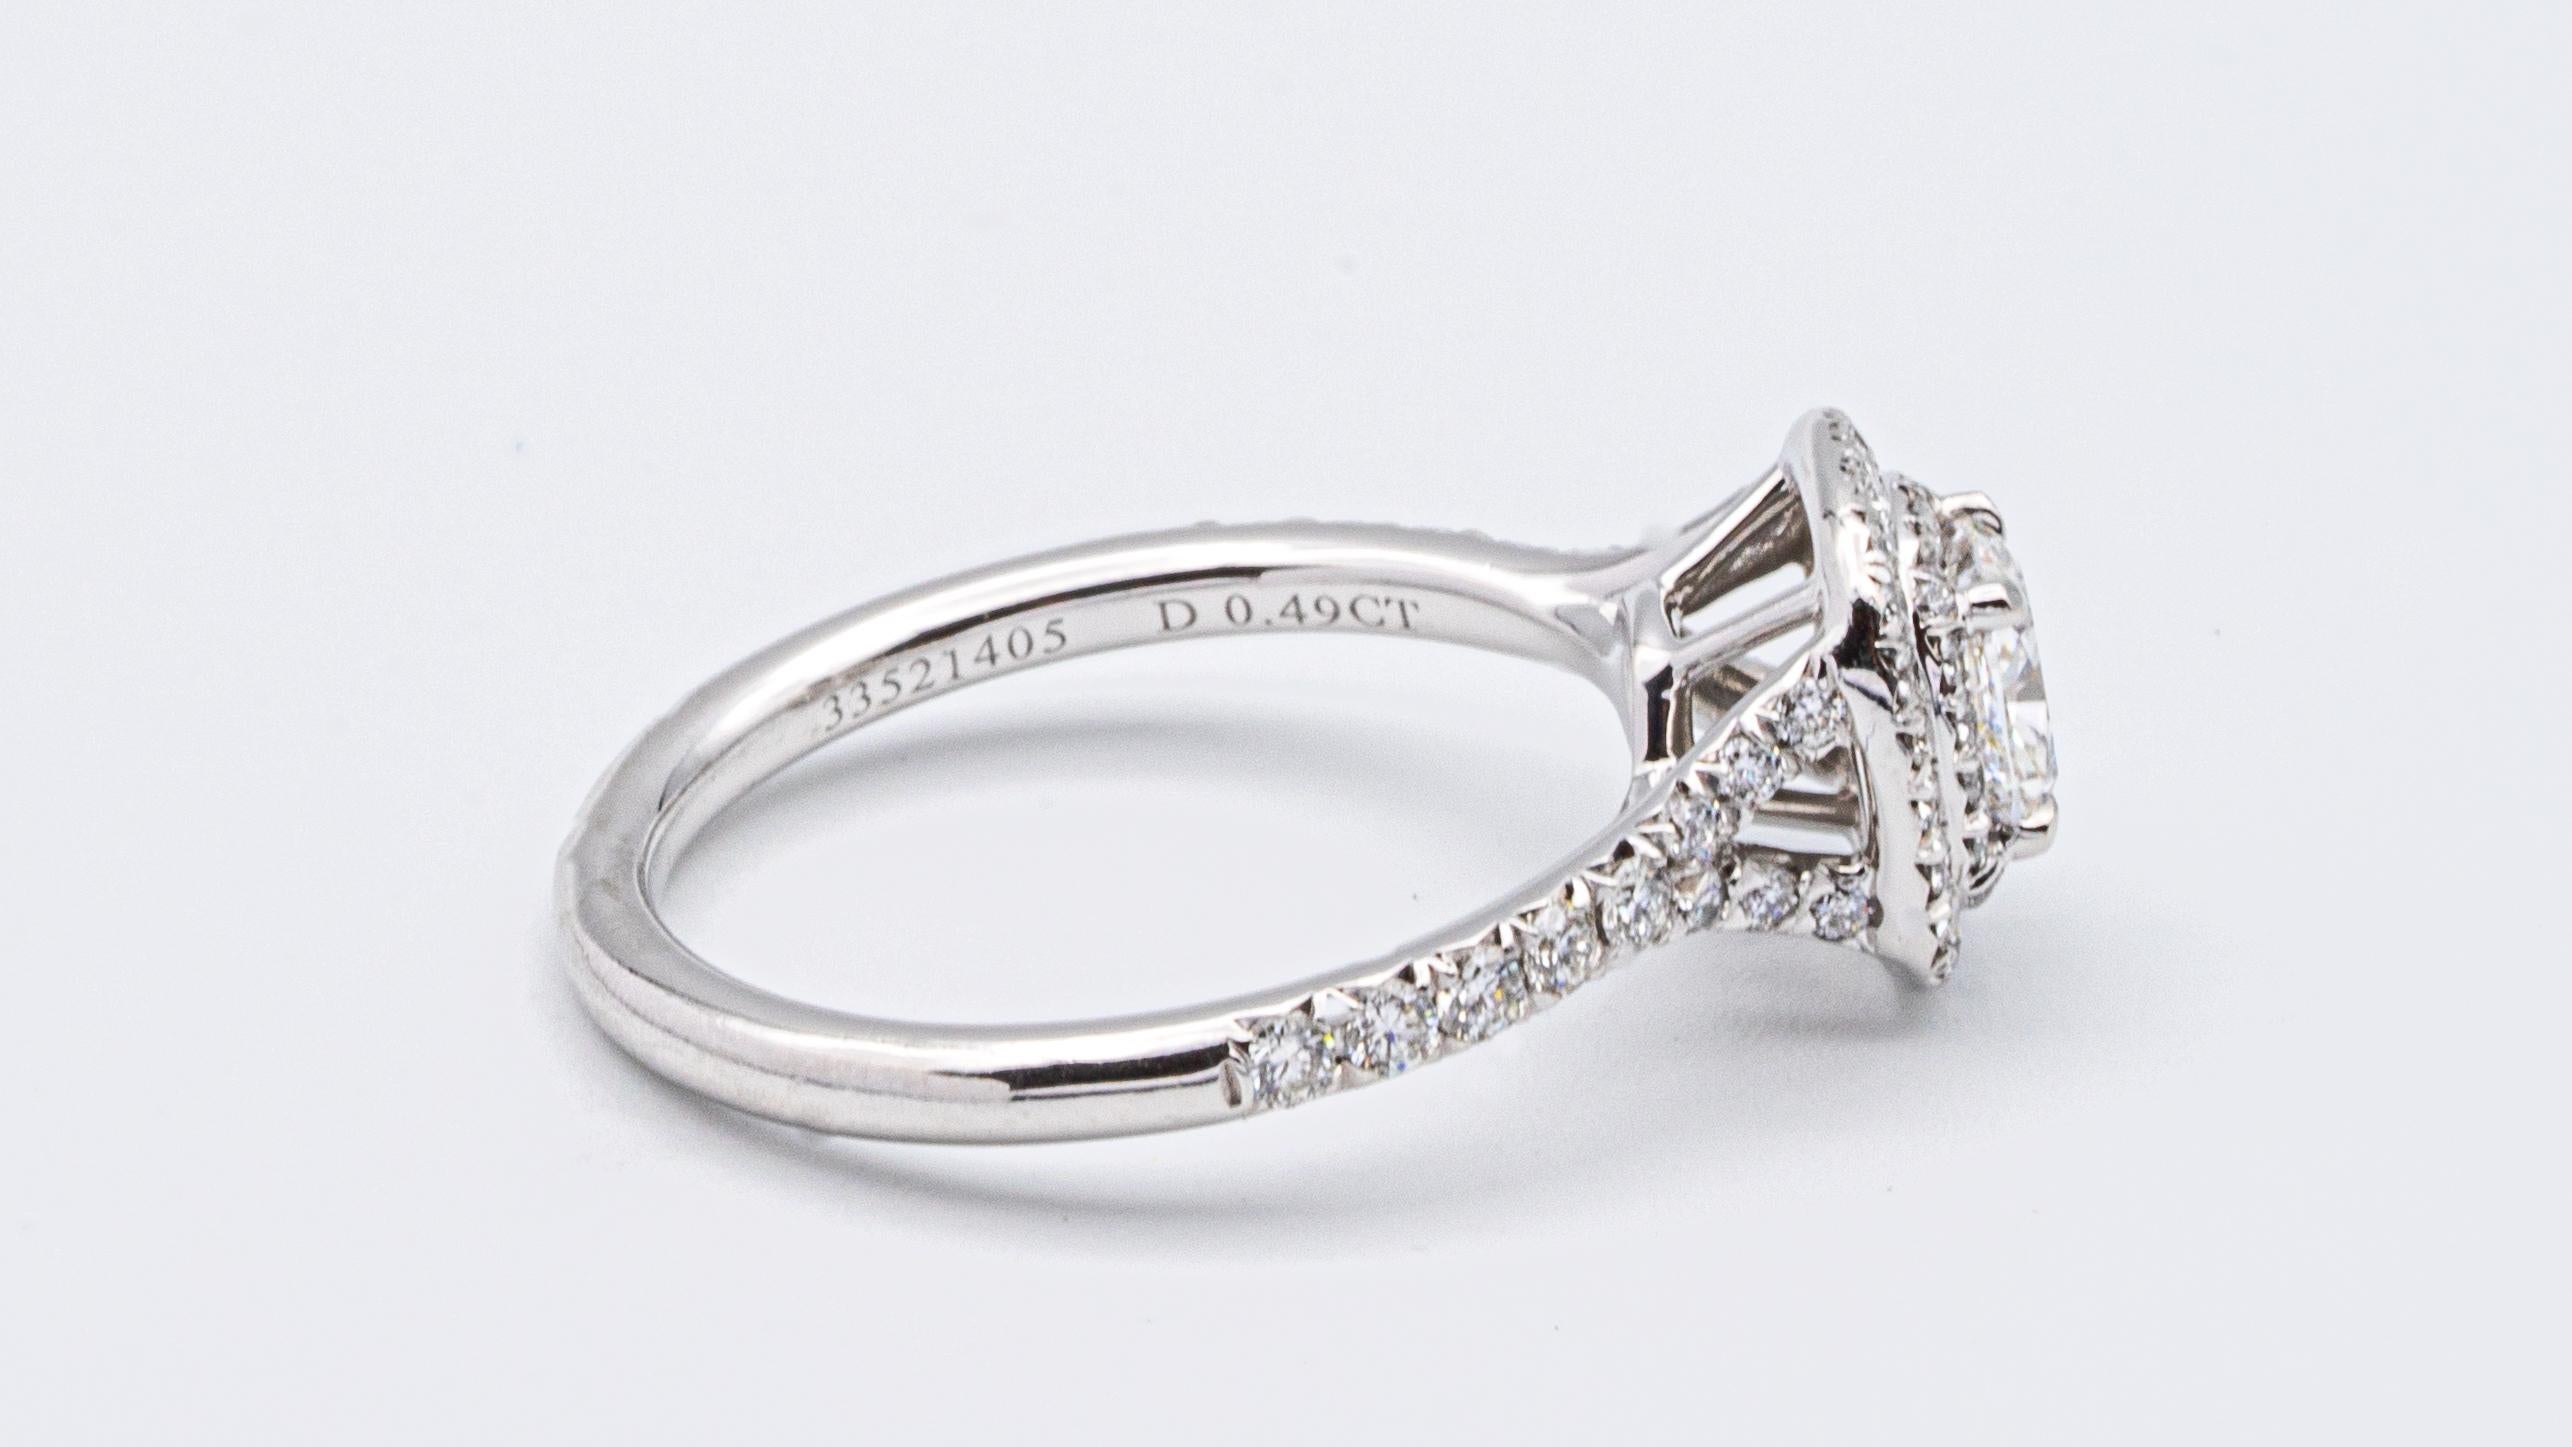 49 carat diamond ring